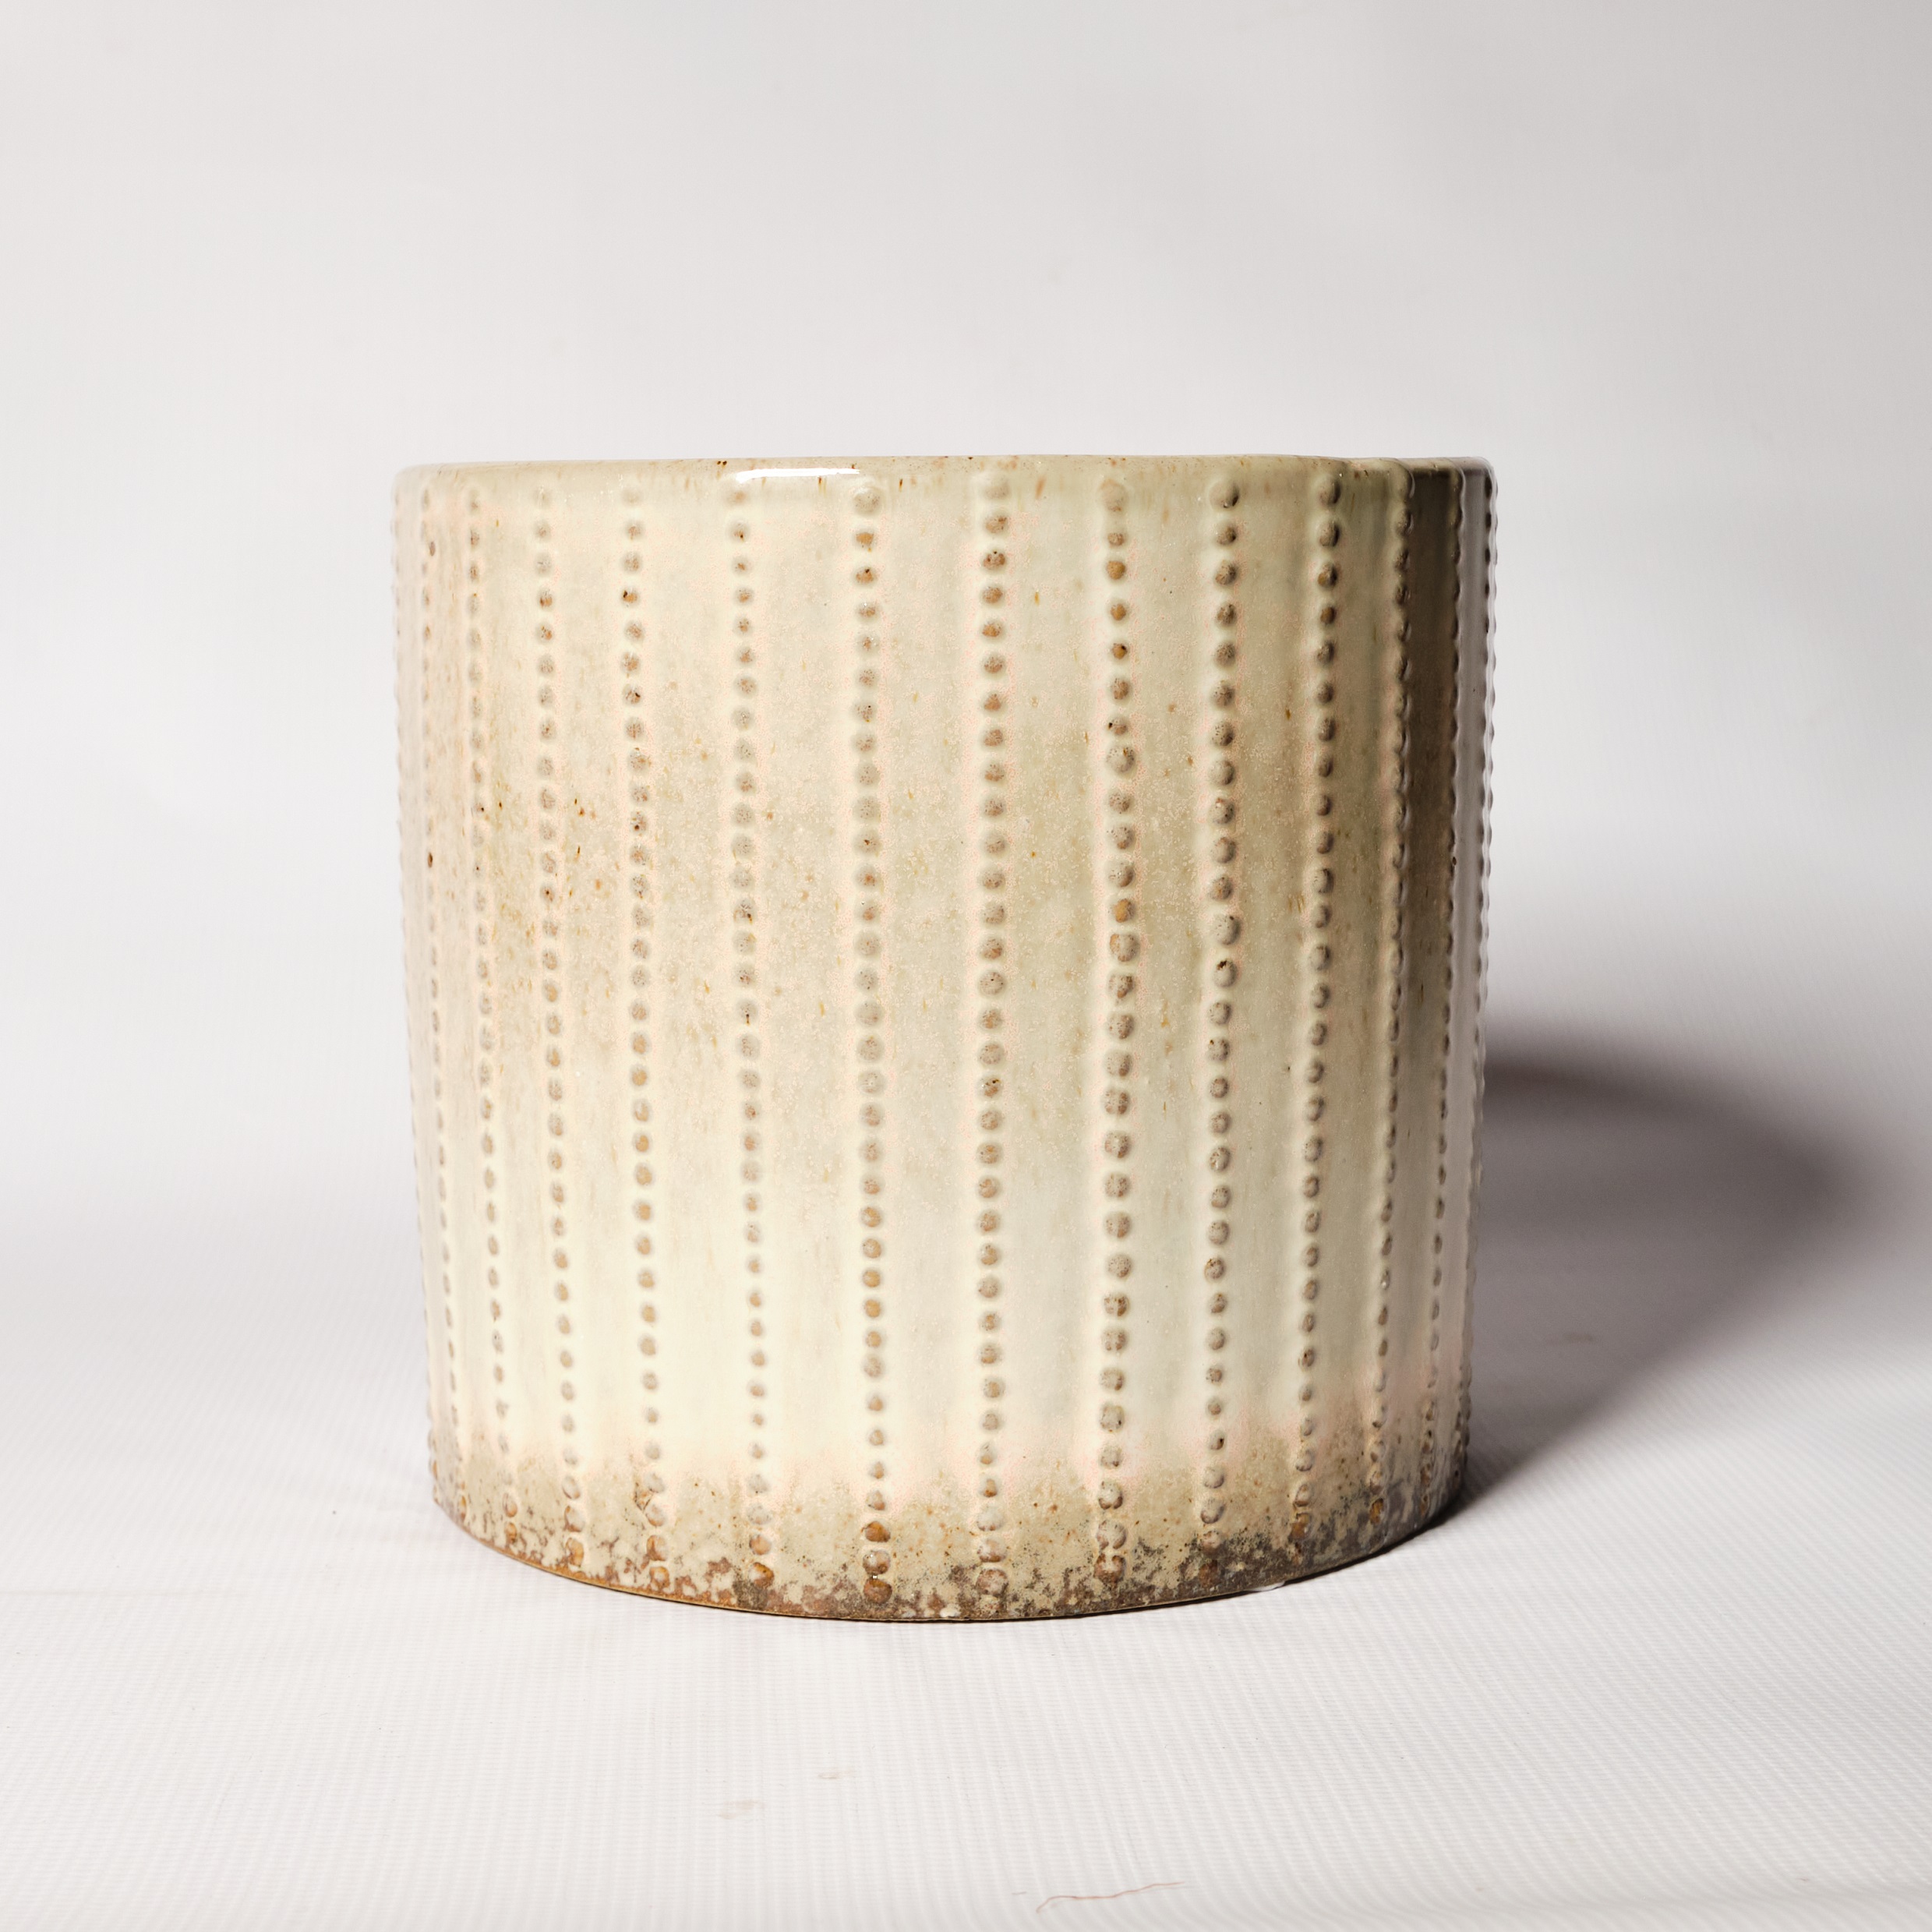 Wikholm Form Cream Glazed Pot w/ Vertical Spots